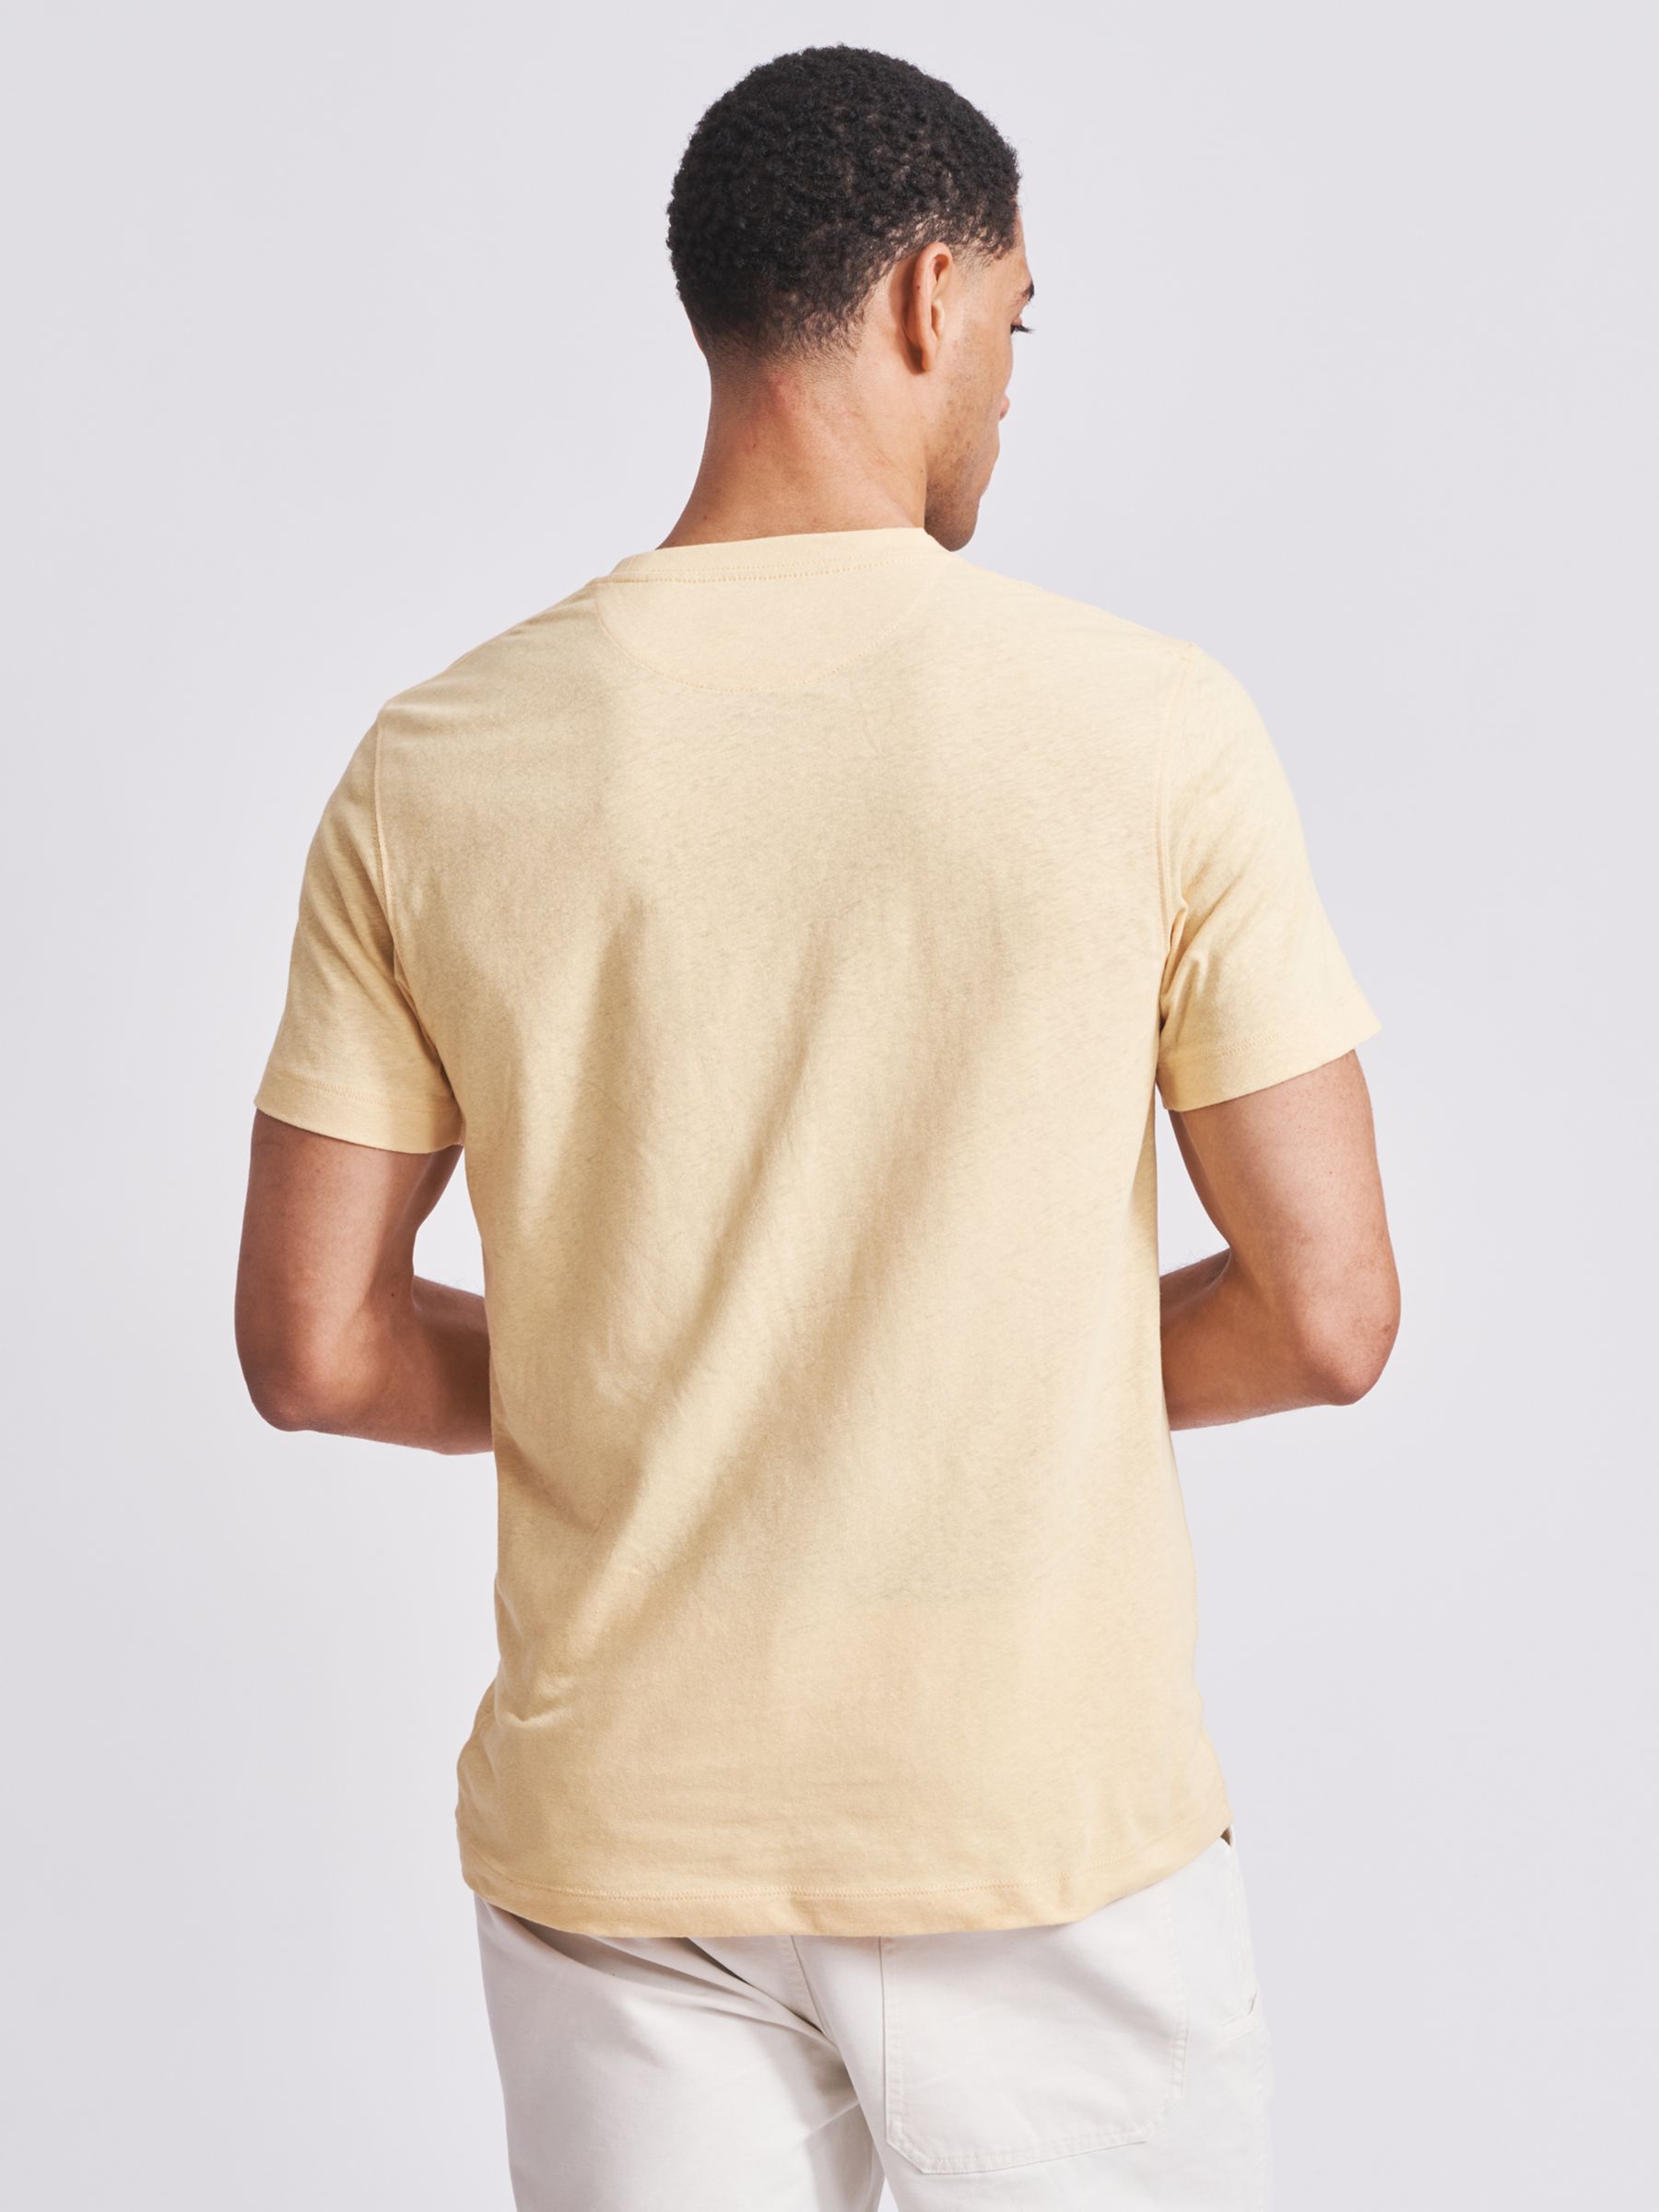 Aubin Hampton Cotton Linen T-Shirt, Yellow, S